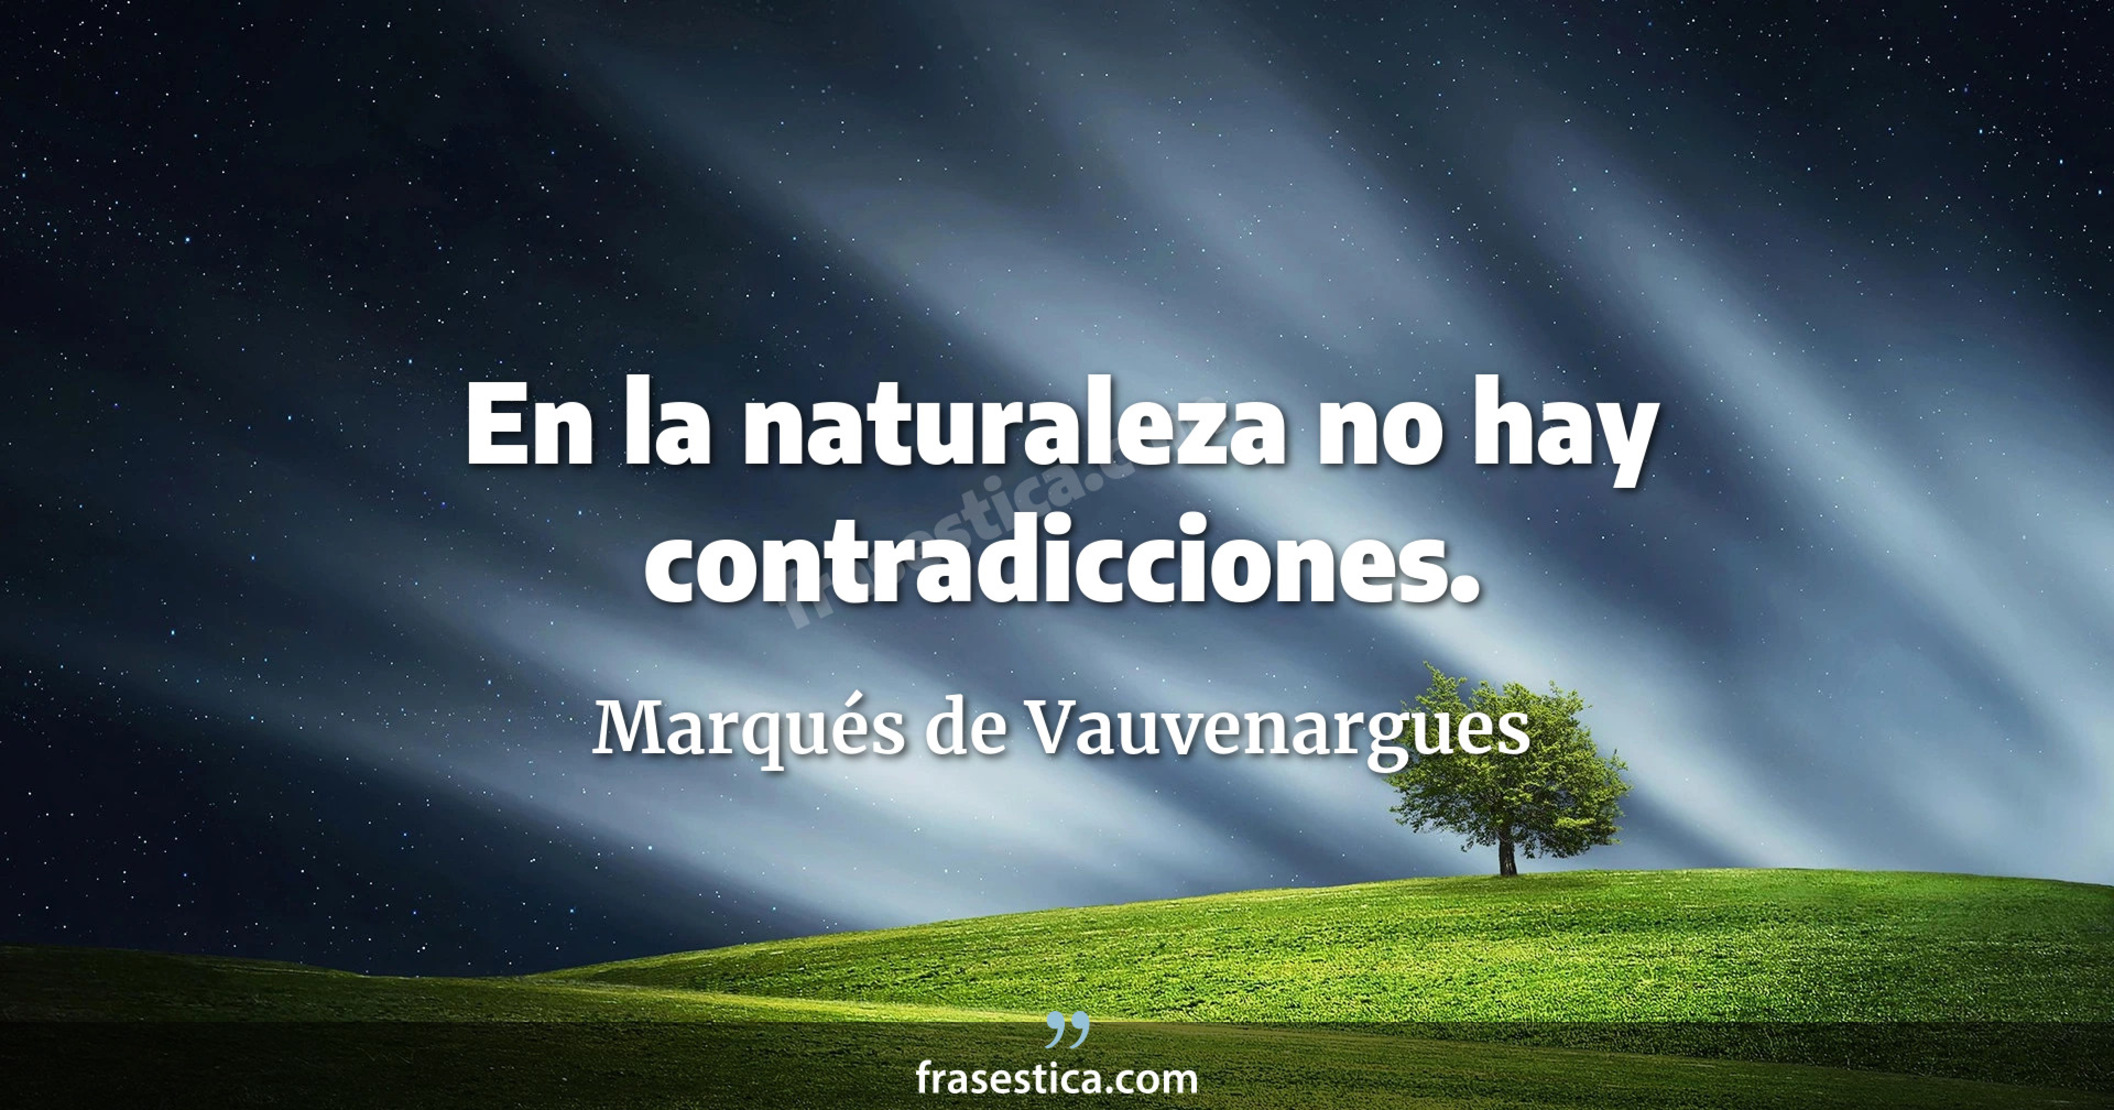 En la naturaleza no hay contradicciones. - Marqués de Vauvenargues